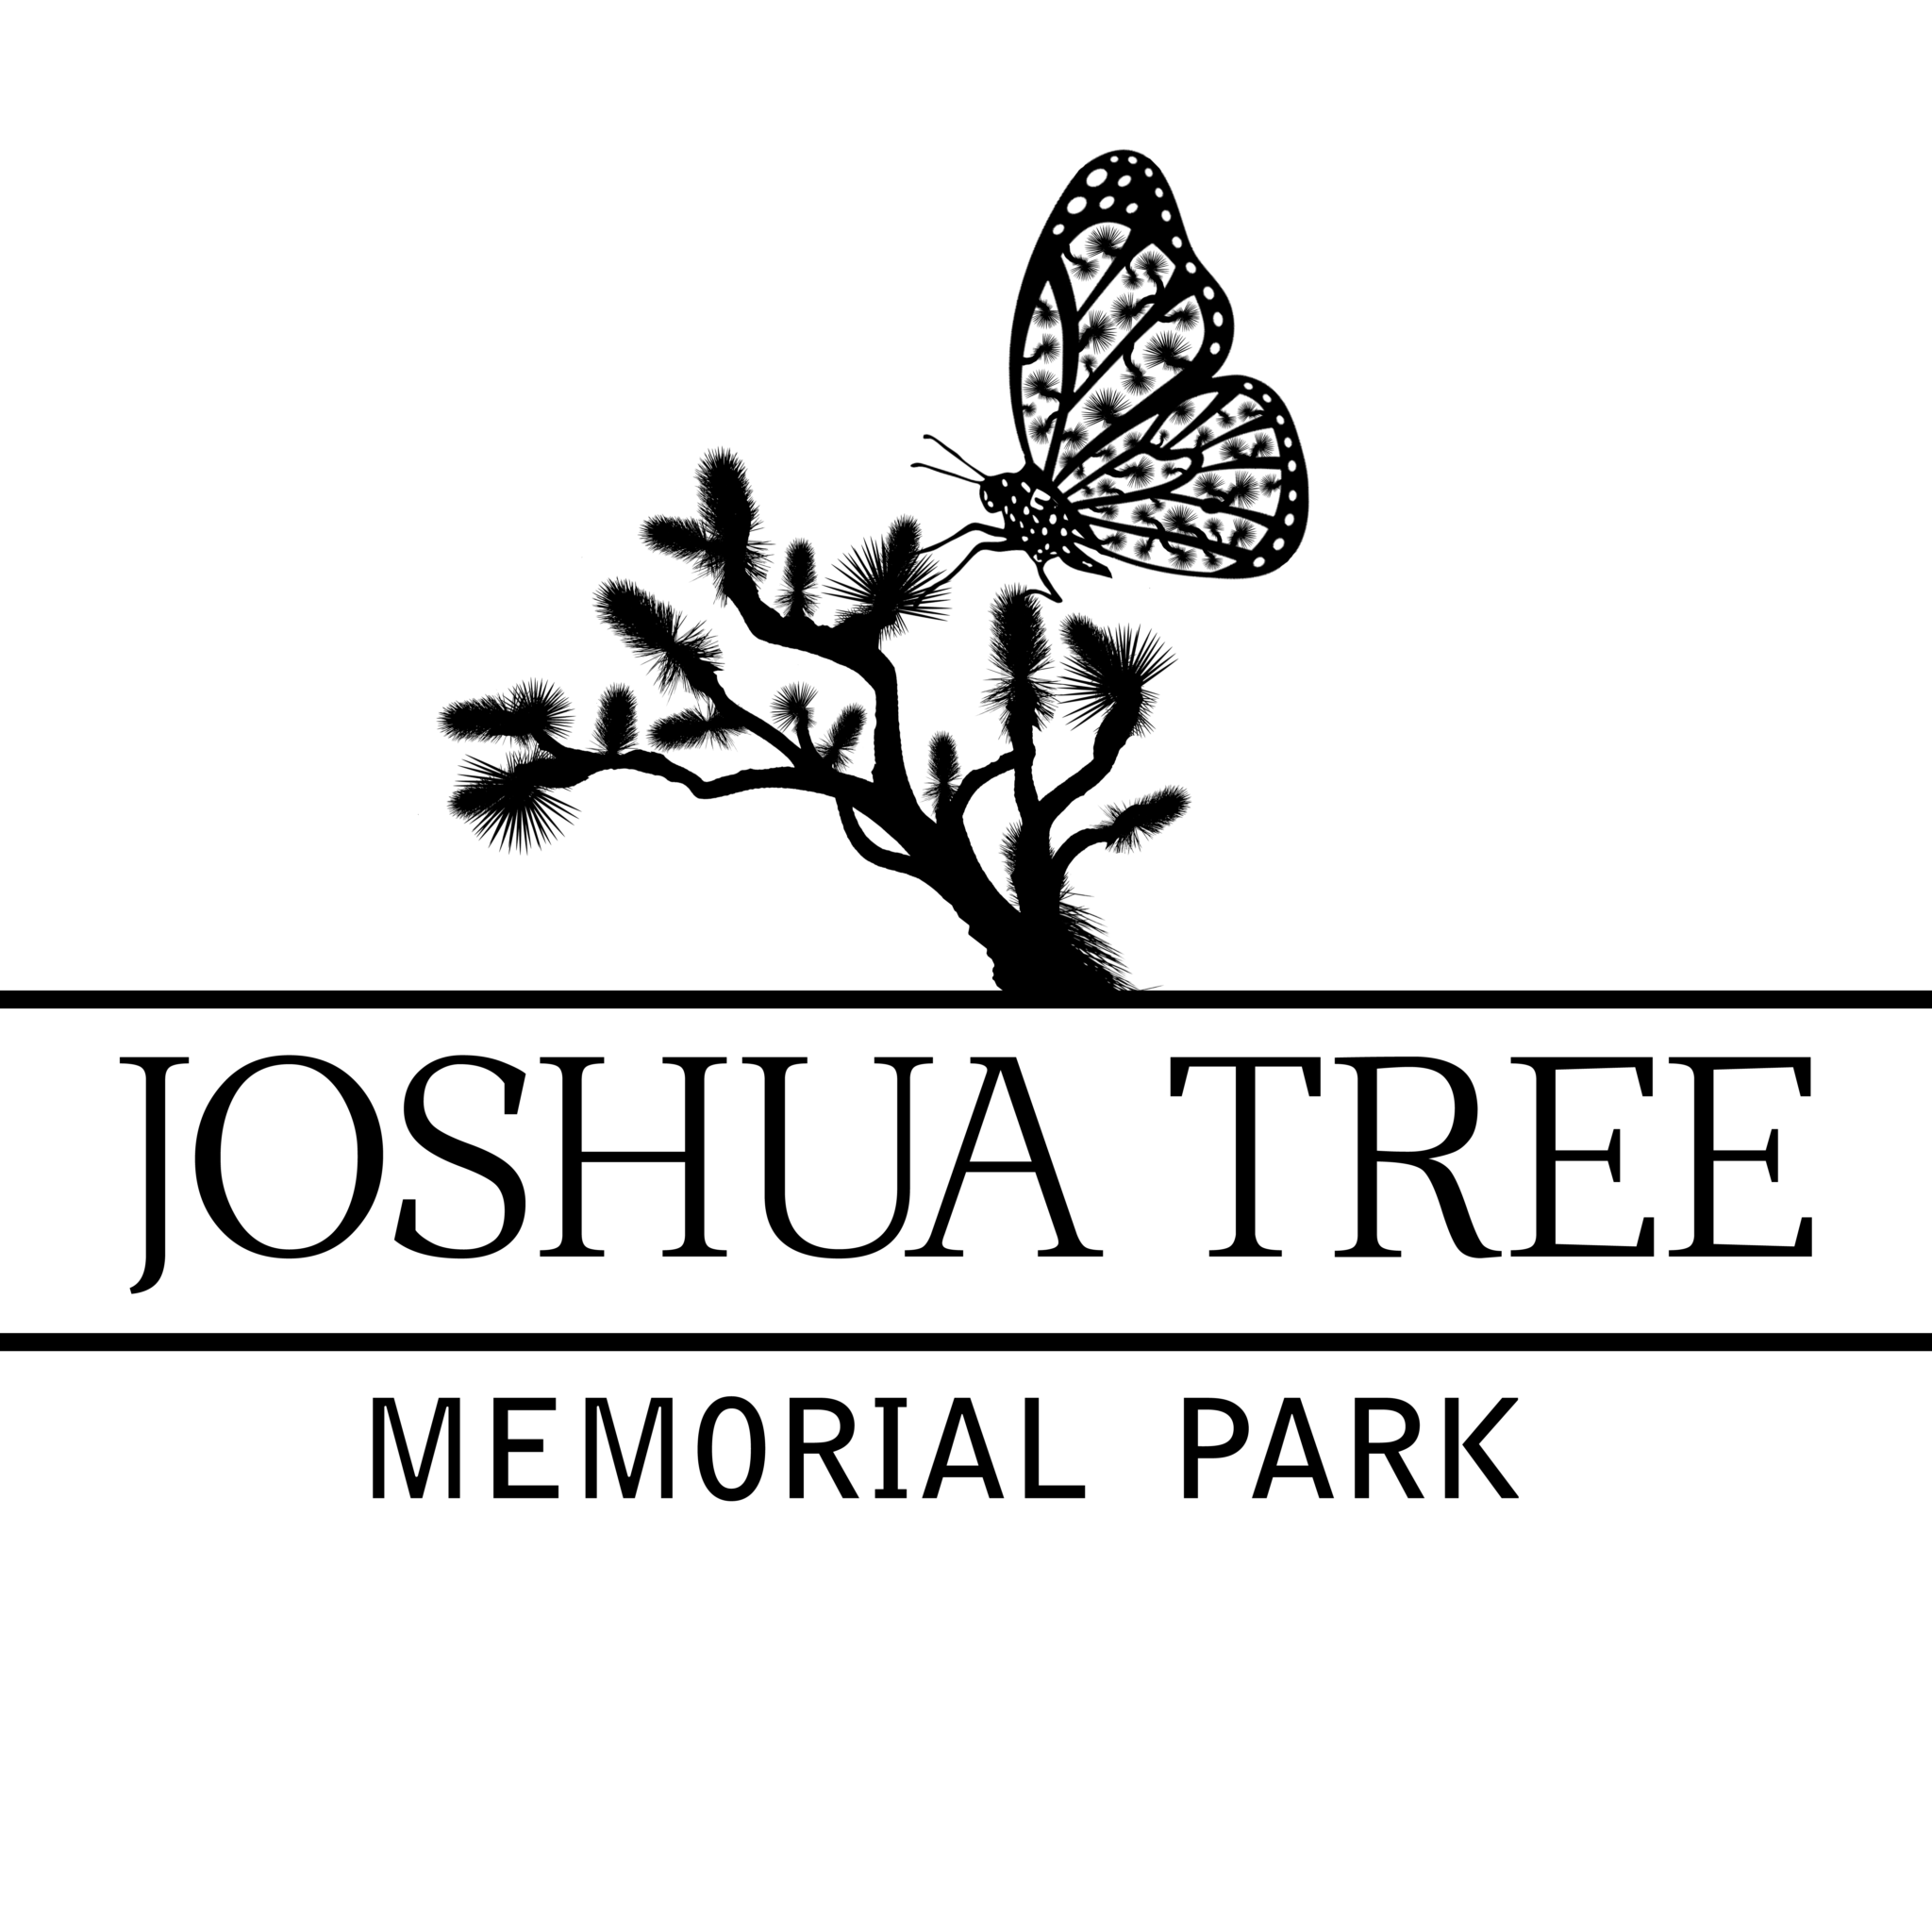 Joshua Tree Memorial Park